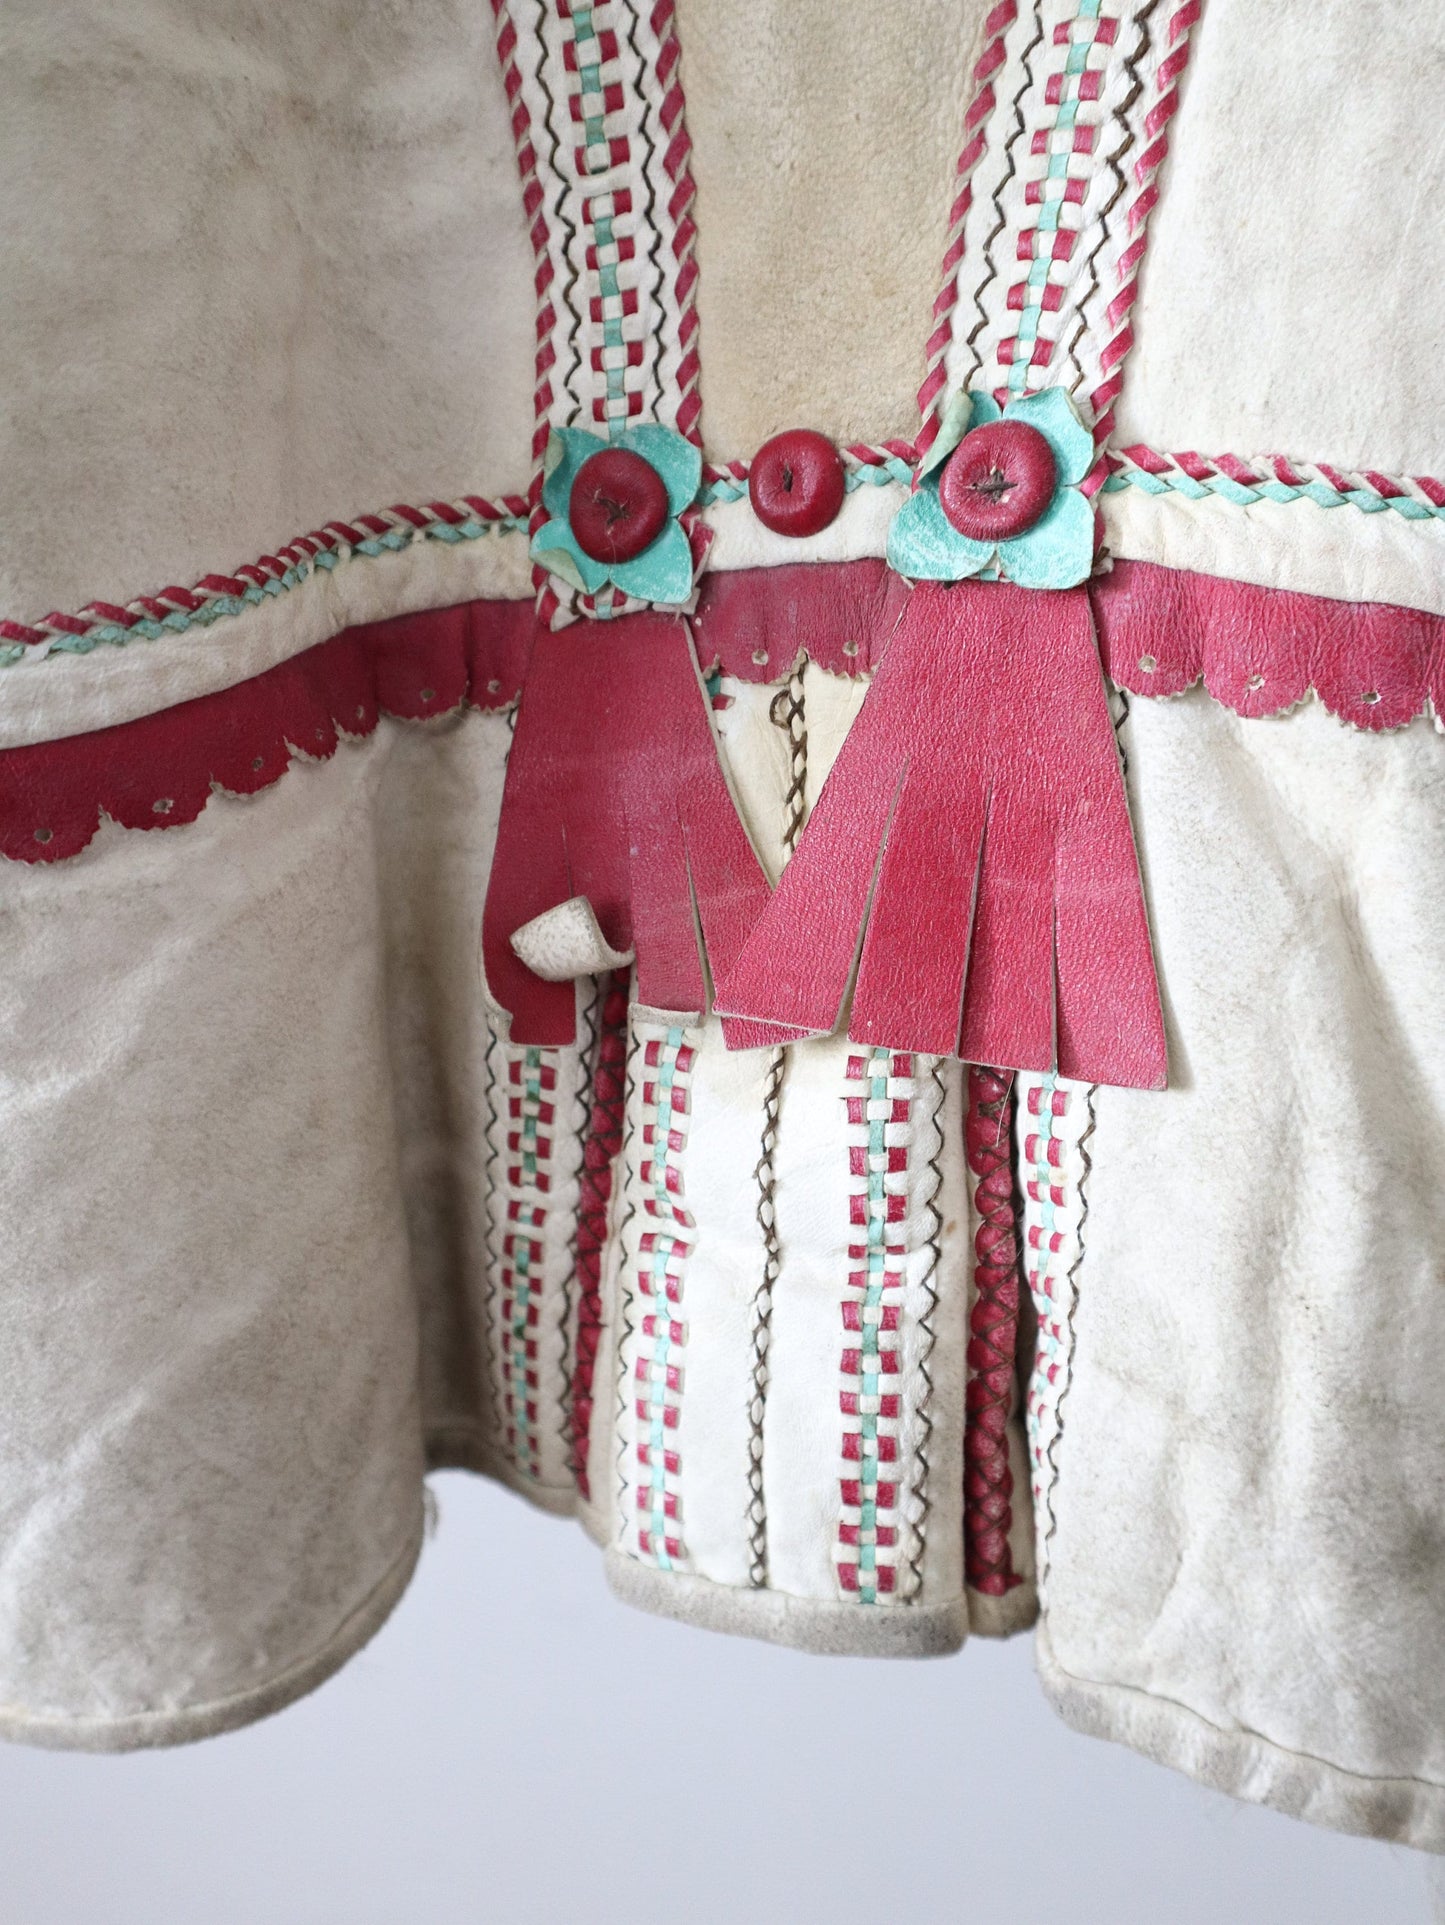 1920s Slovakian Sheepskin Folk Jacket Tooled Leather Cream Red Green Crafted